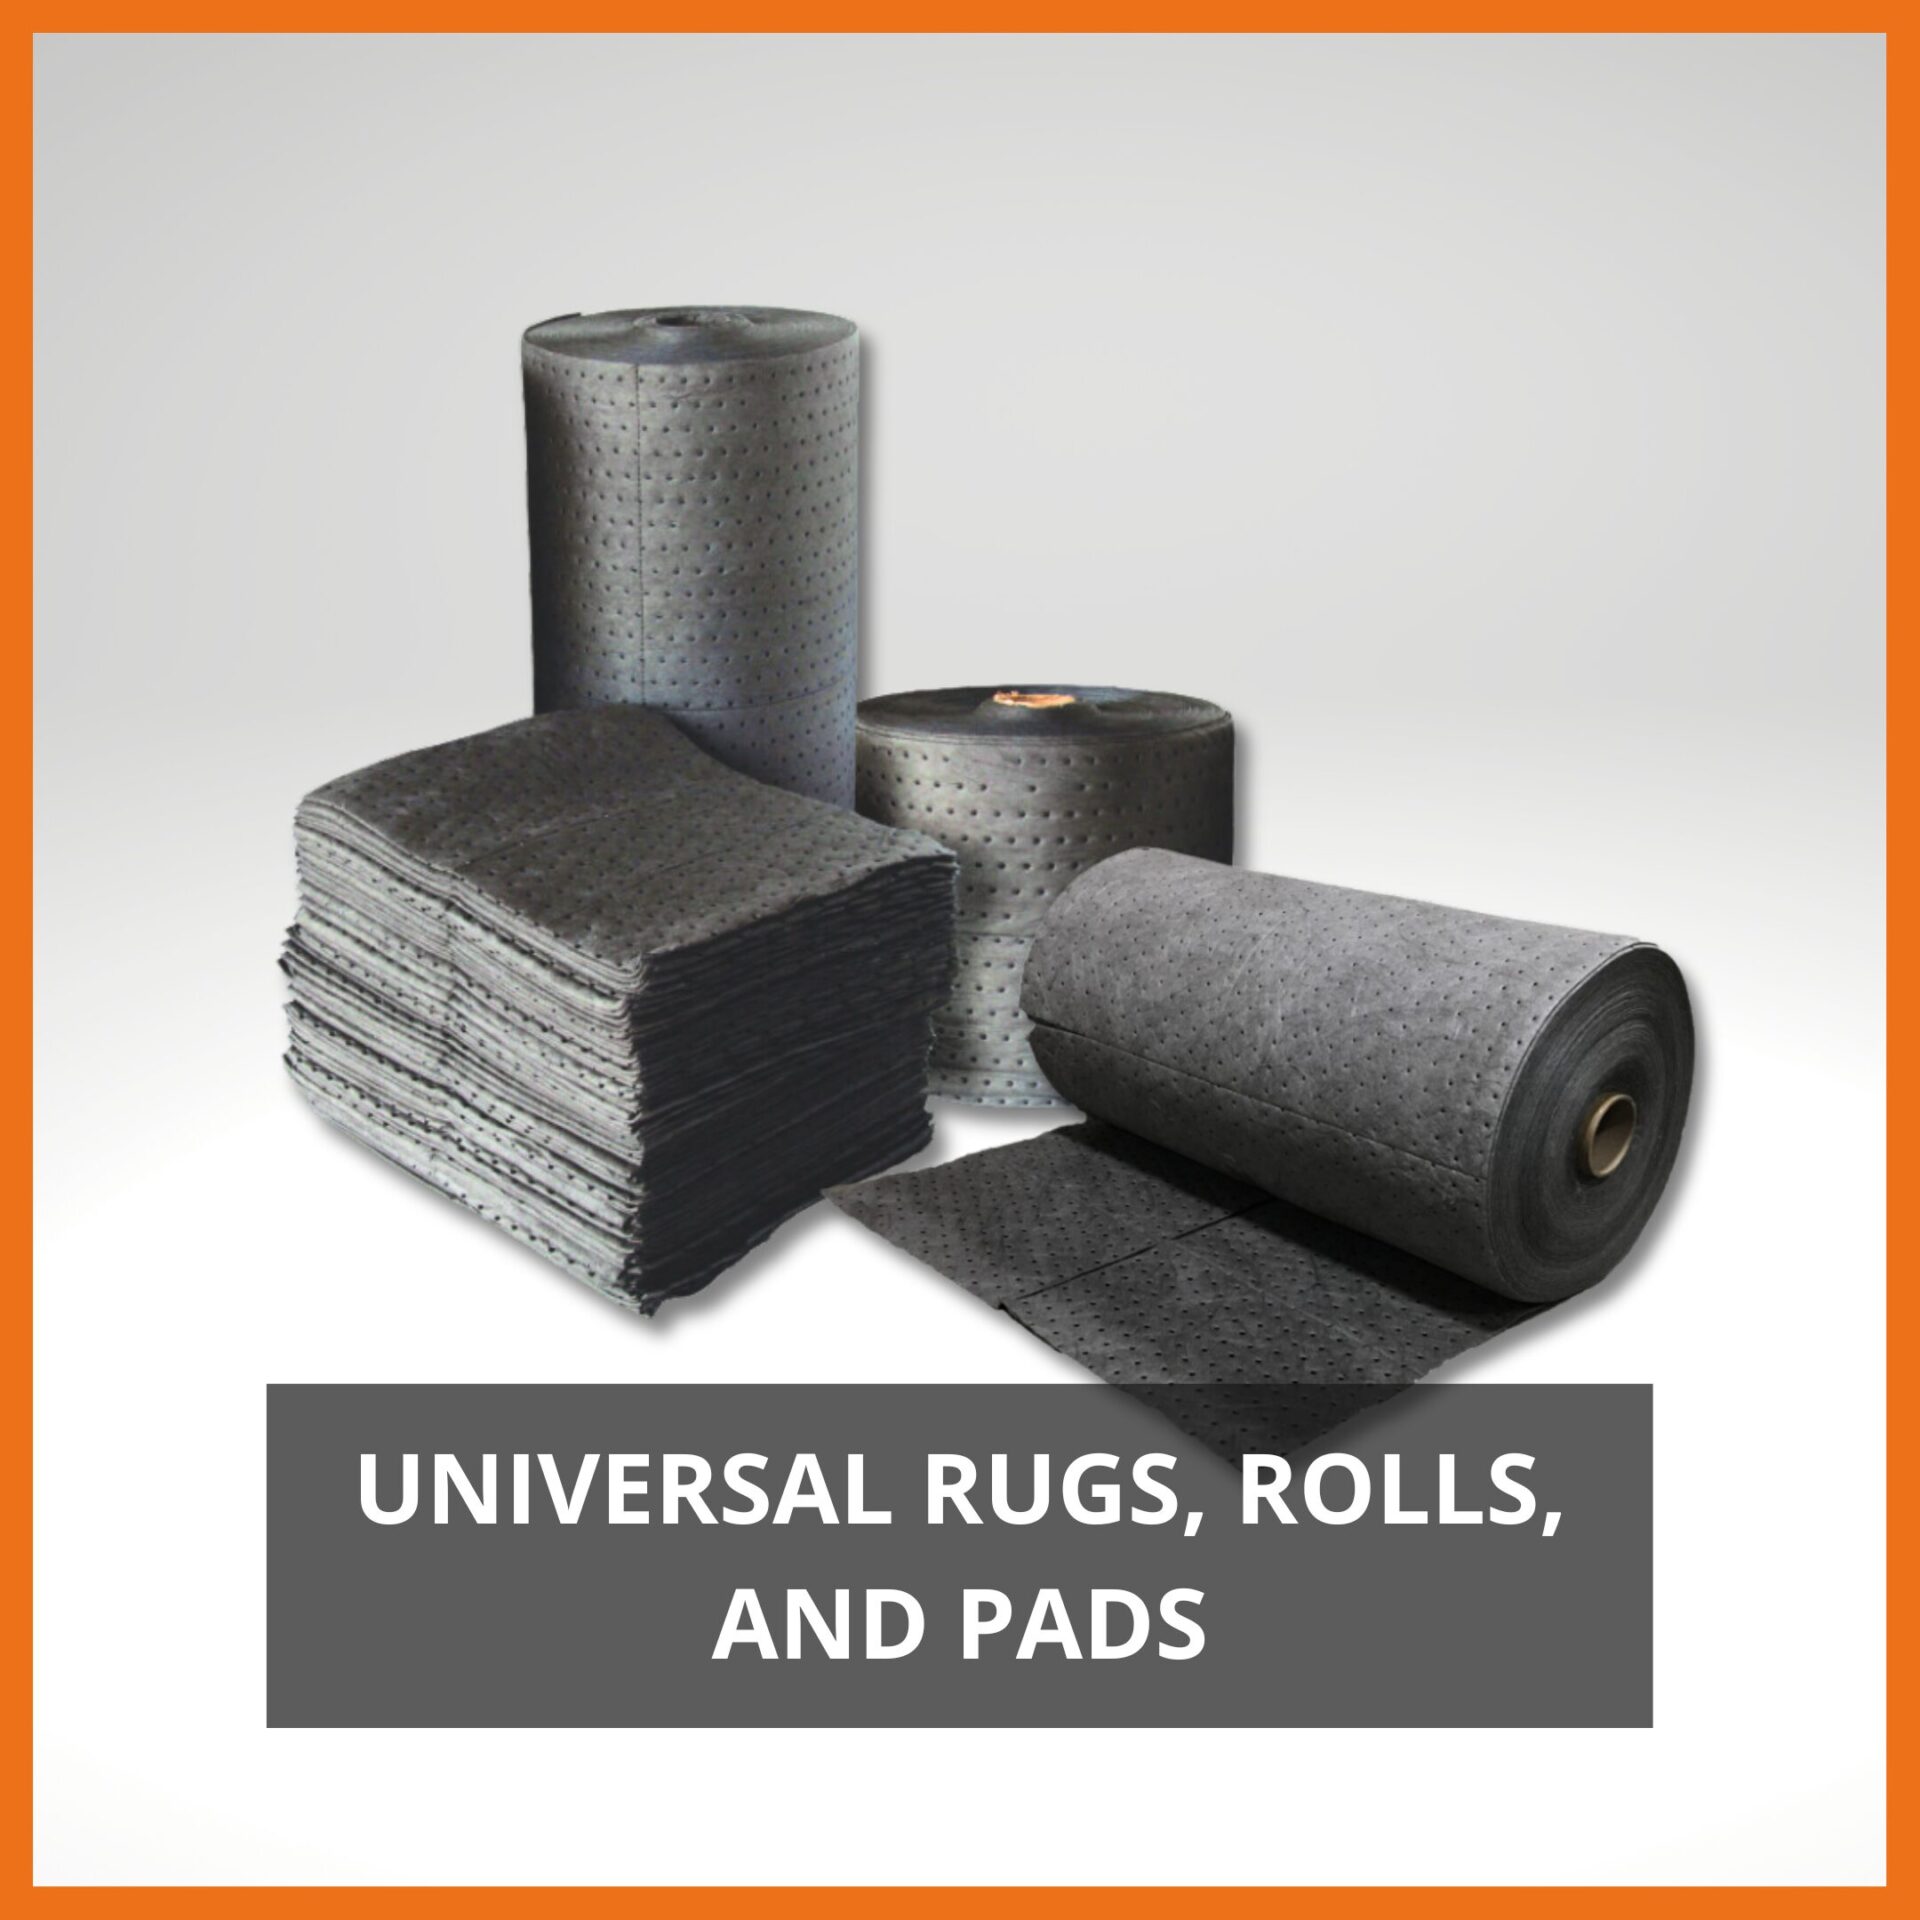 Industrial Rugs & Universal Accessories